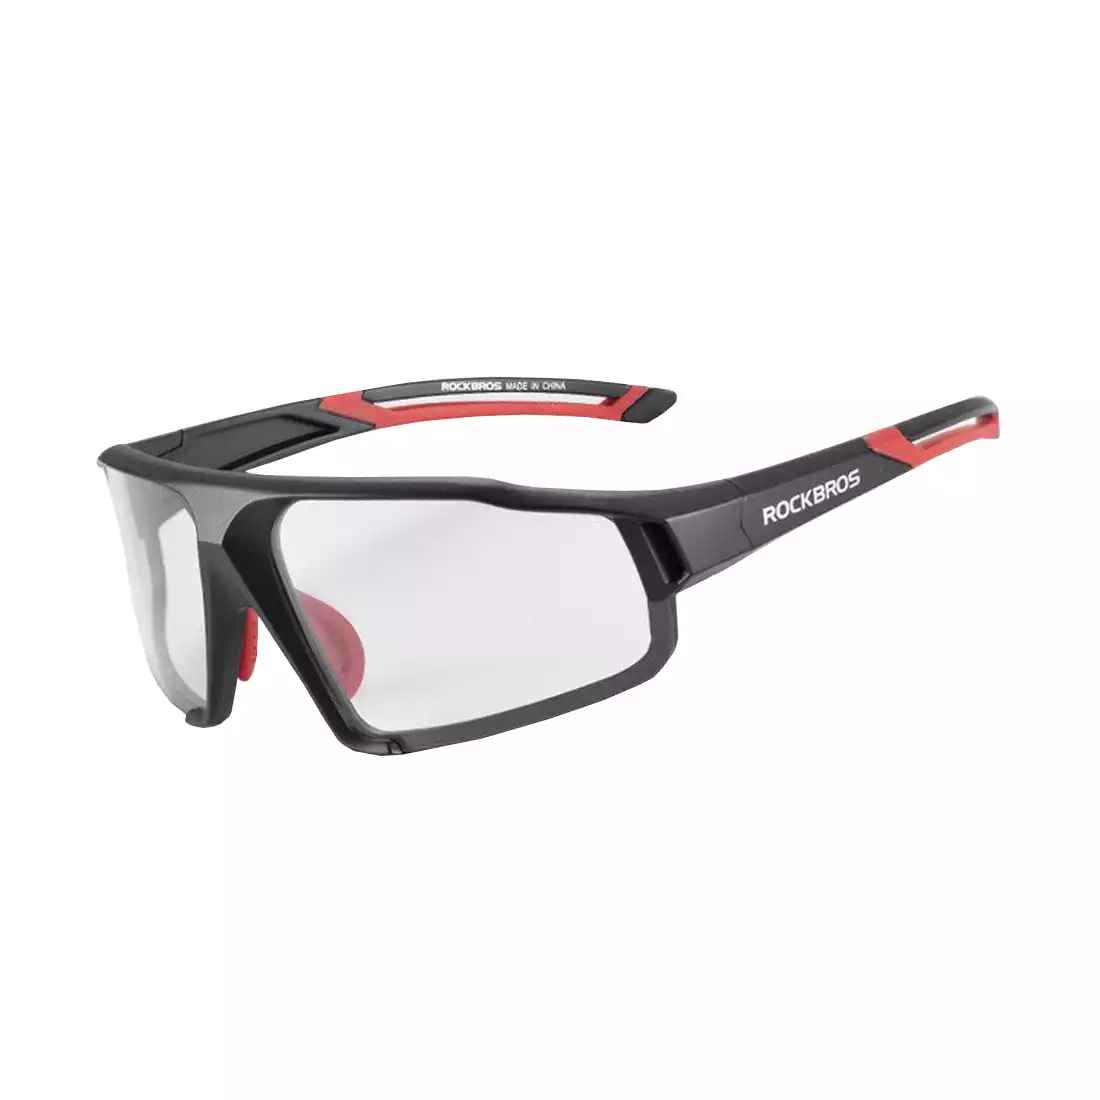 ROCKBROS Cycling Photochromic Glasses Men's Full Frame Sports Bike Sunglasses 